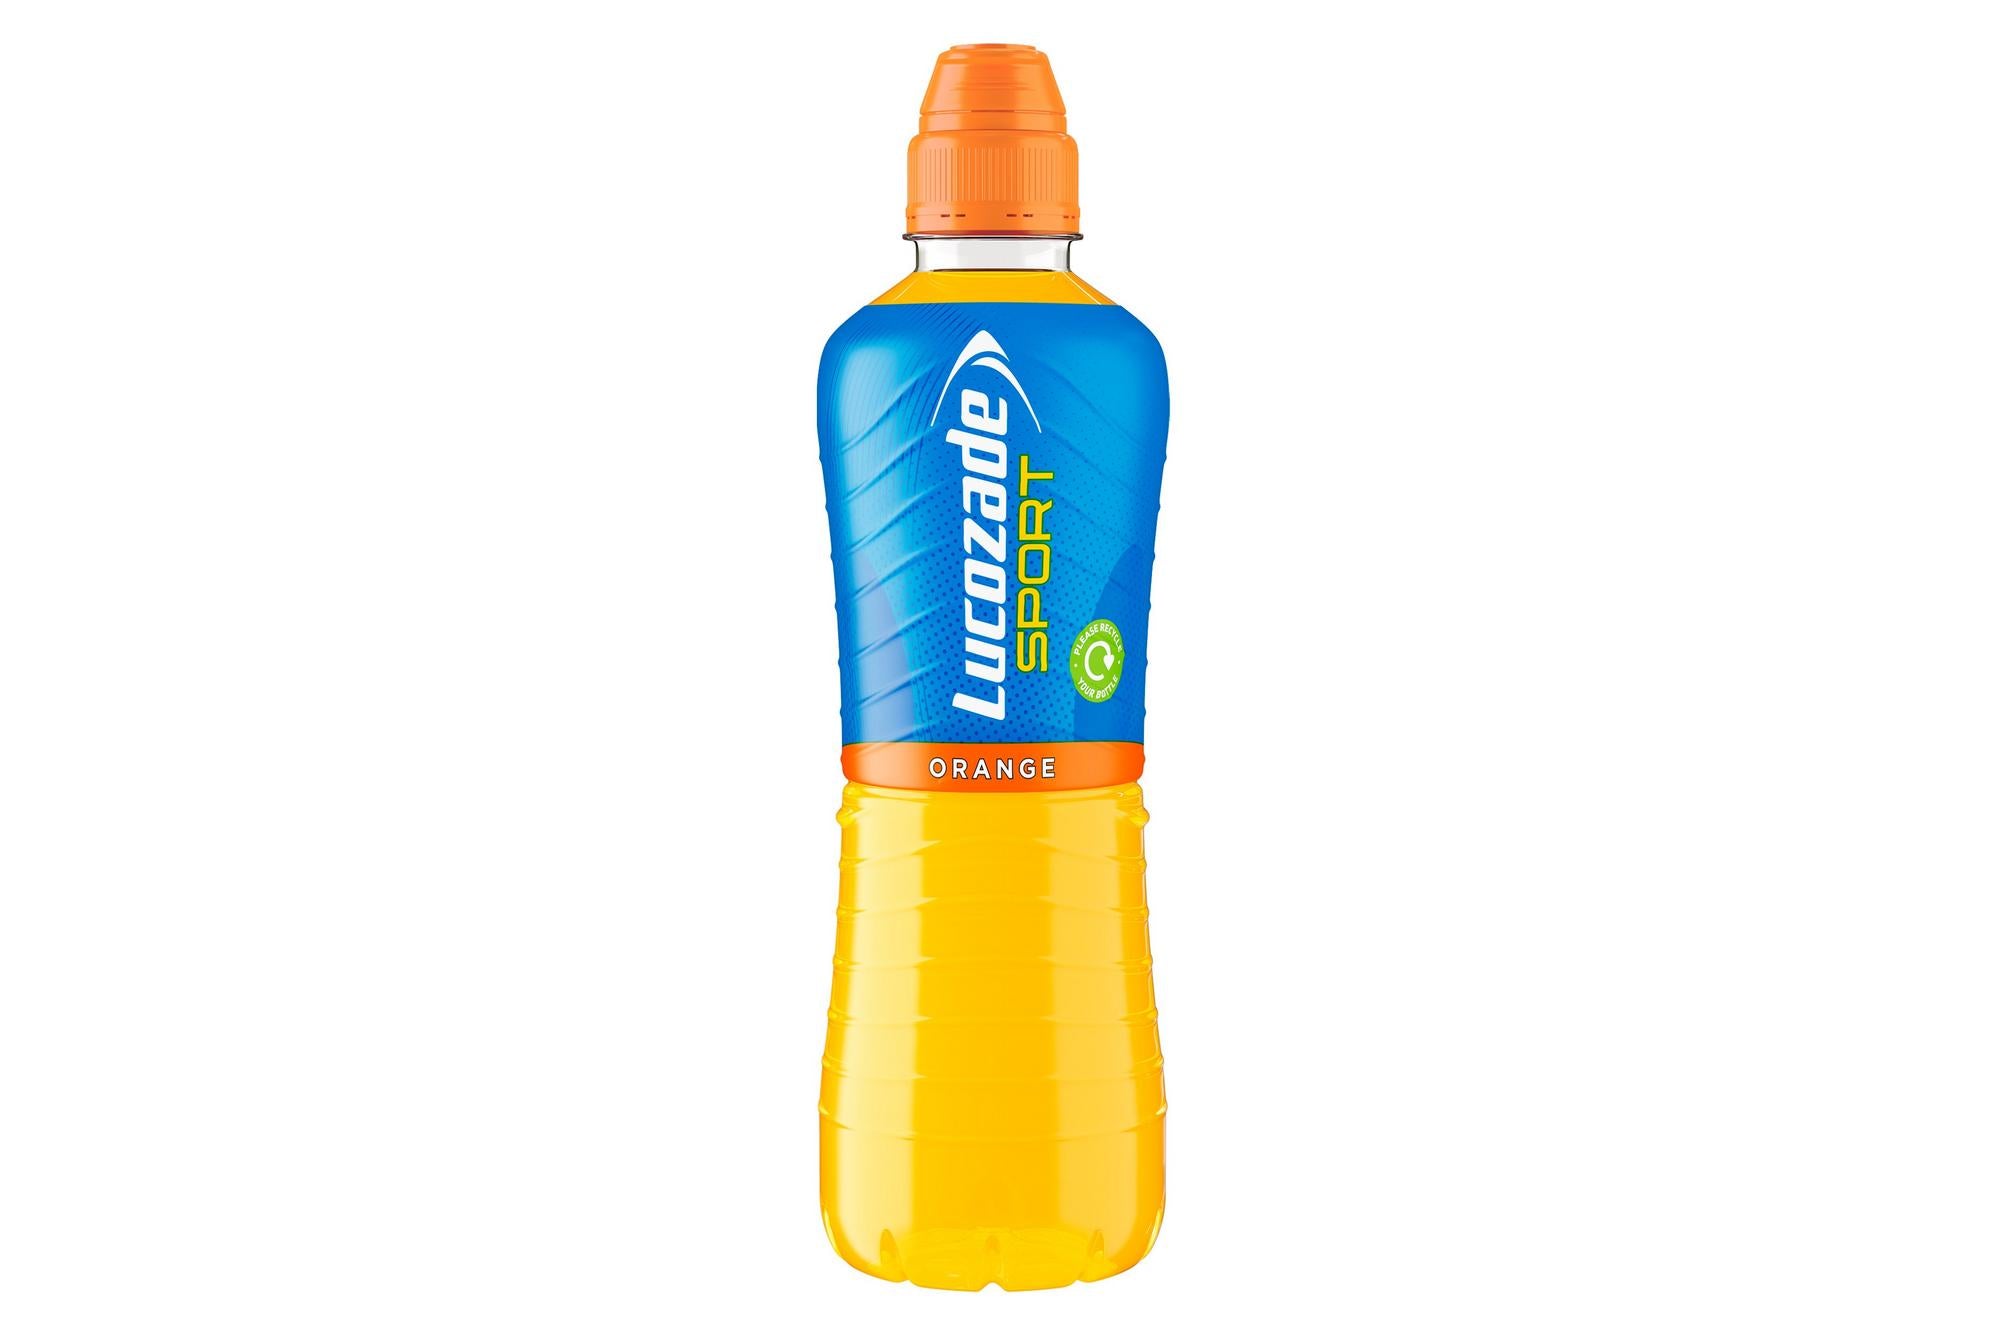 Lucozade Sport Orange 500ml